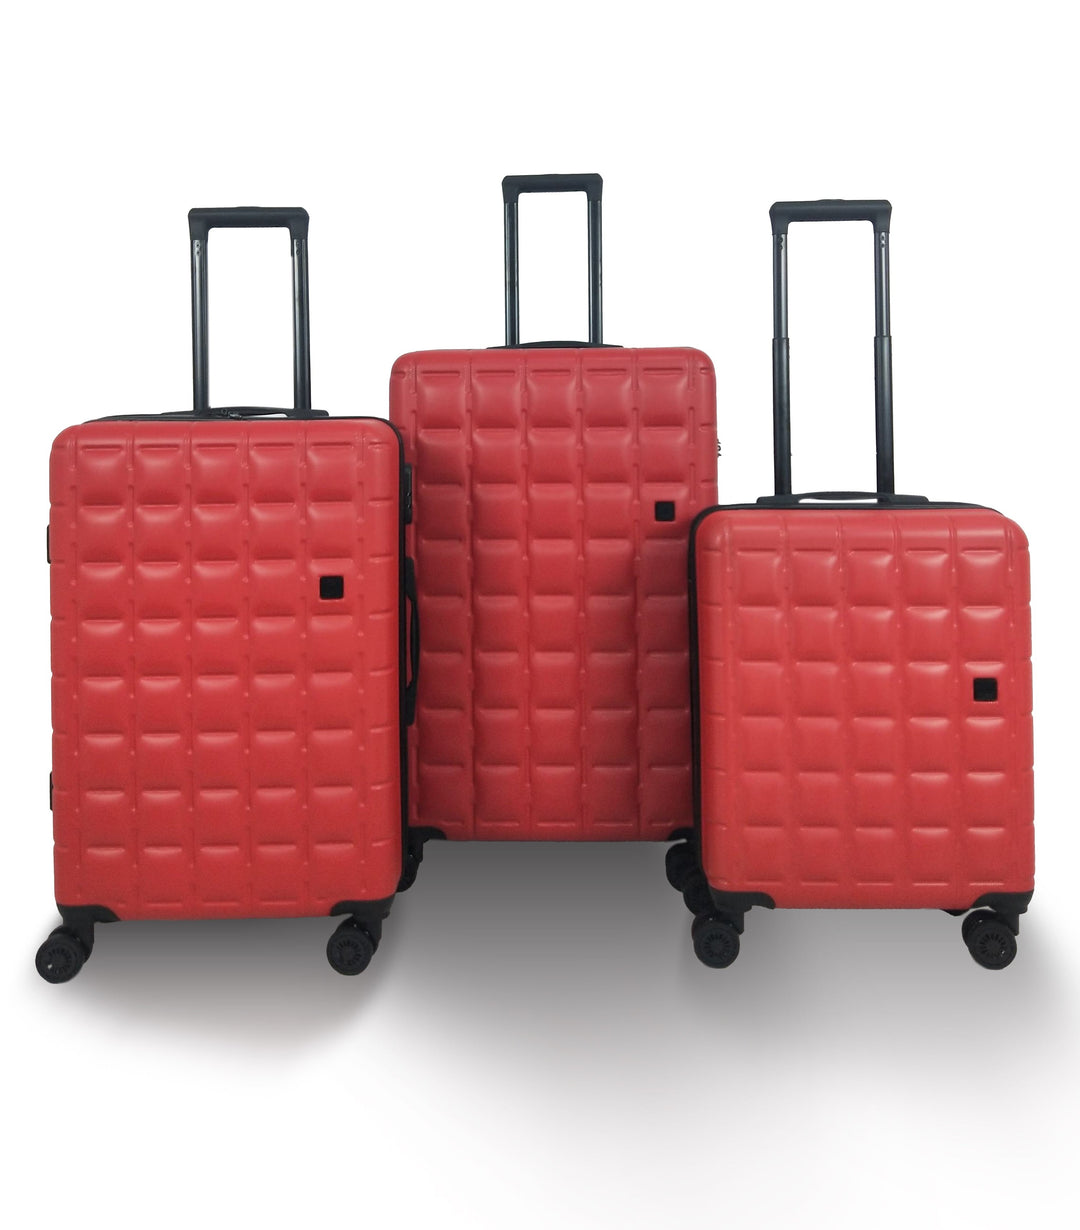 Qubed Squared 3 Piece Suitcase Set